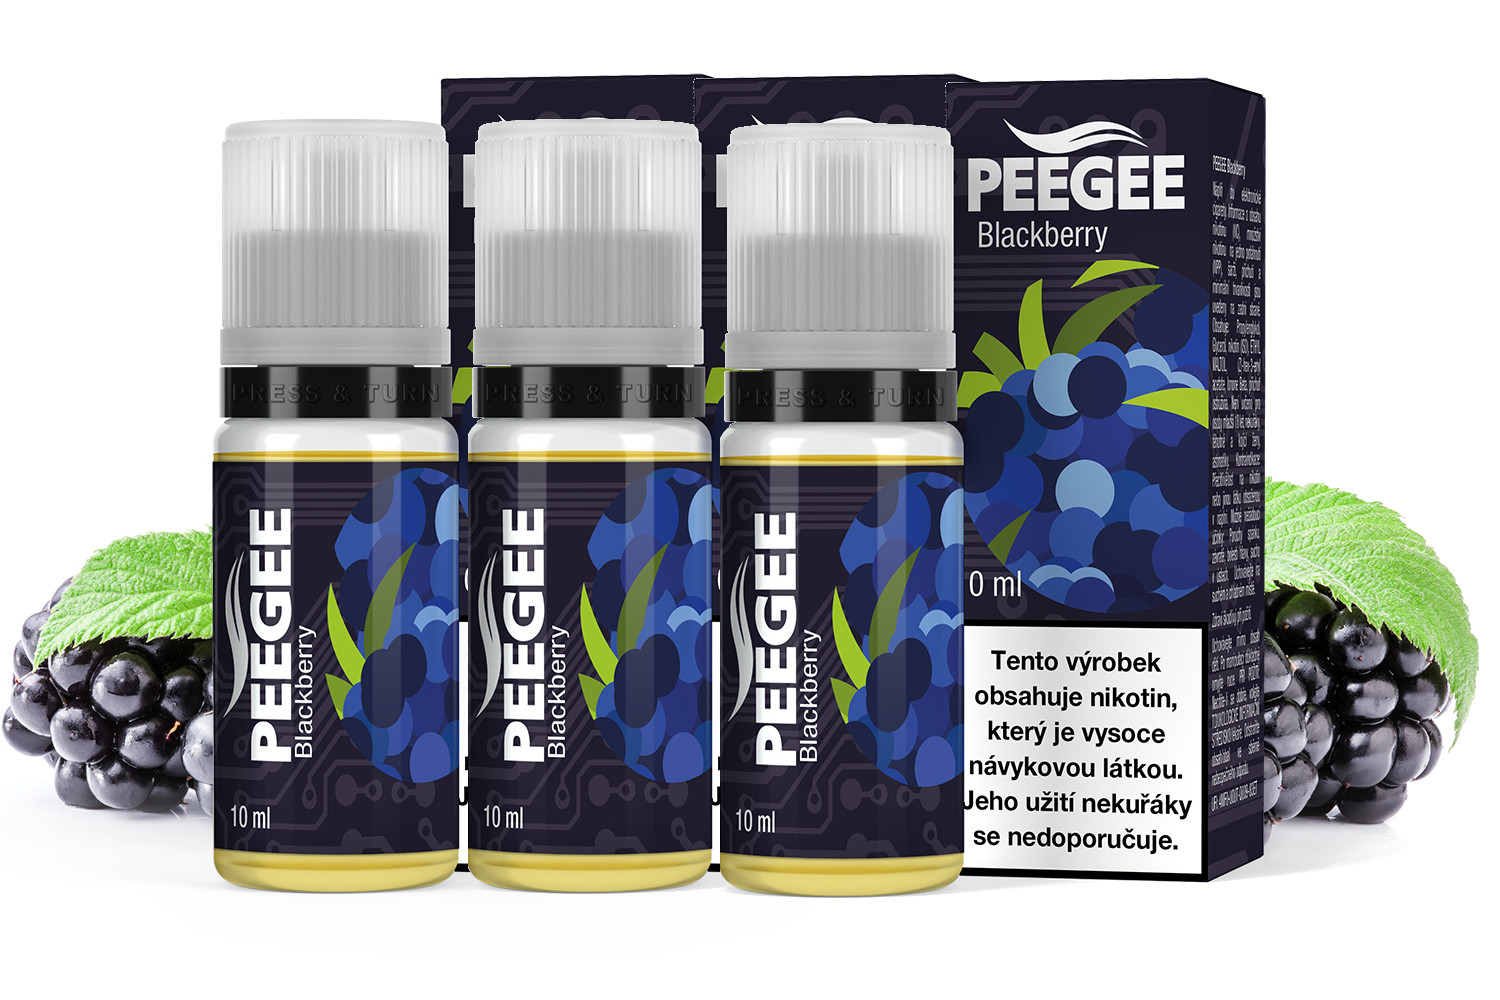 PEEGEE - Ostružina (Blackberry) 3x10ml Obsah nikotinu: 12mg